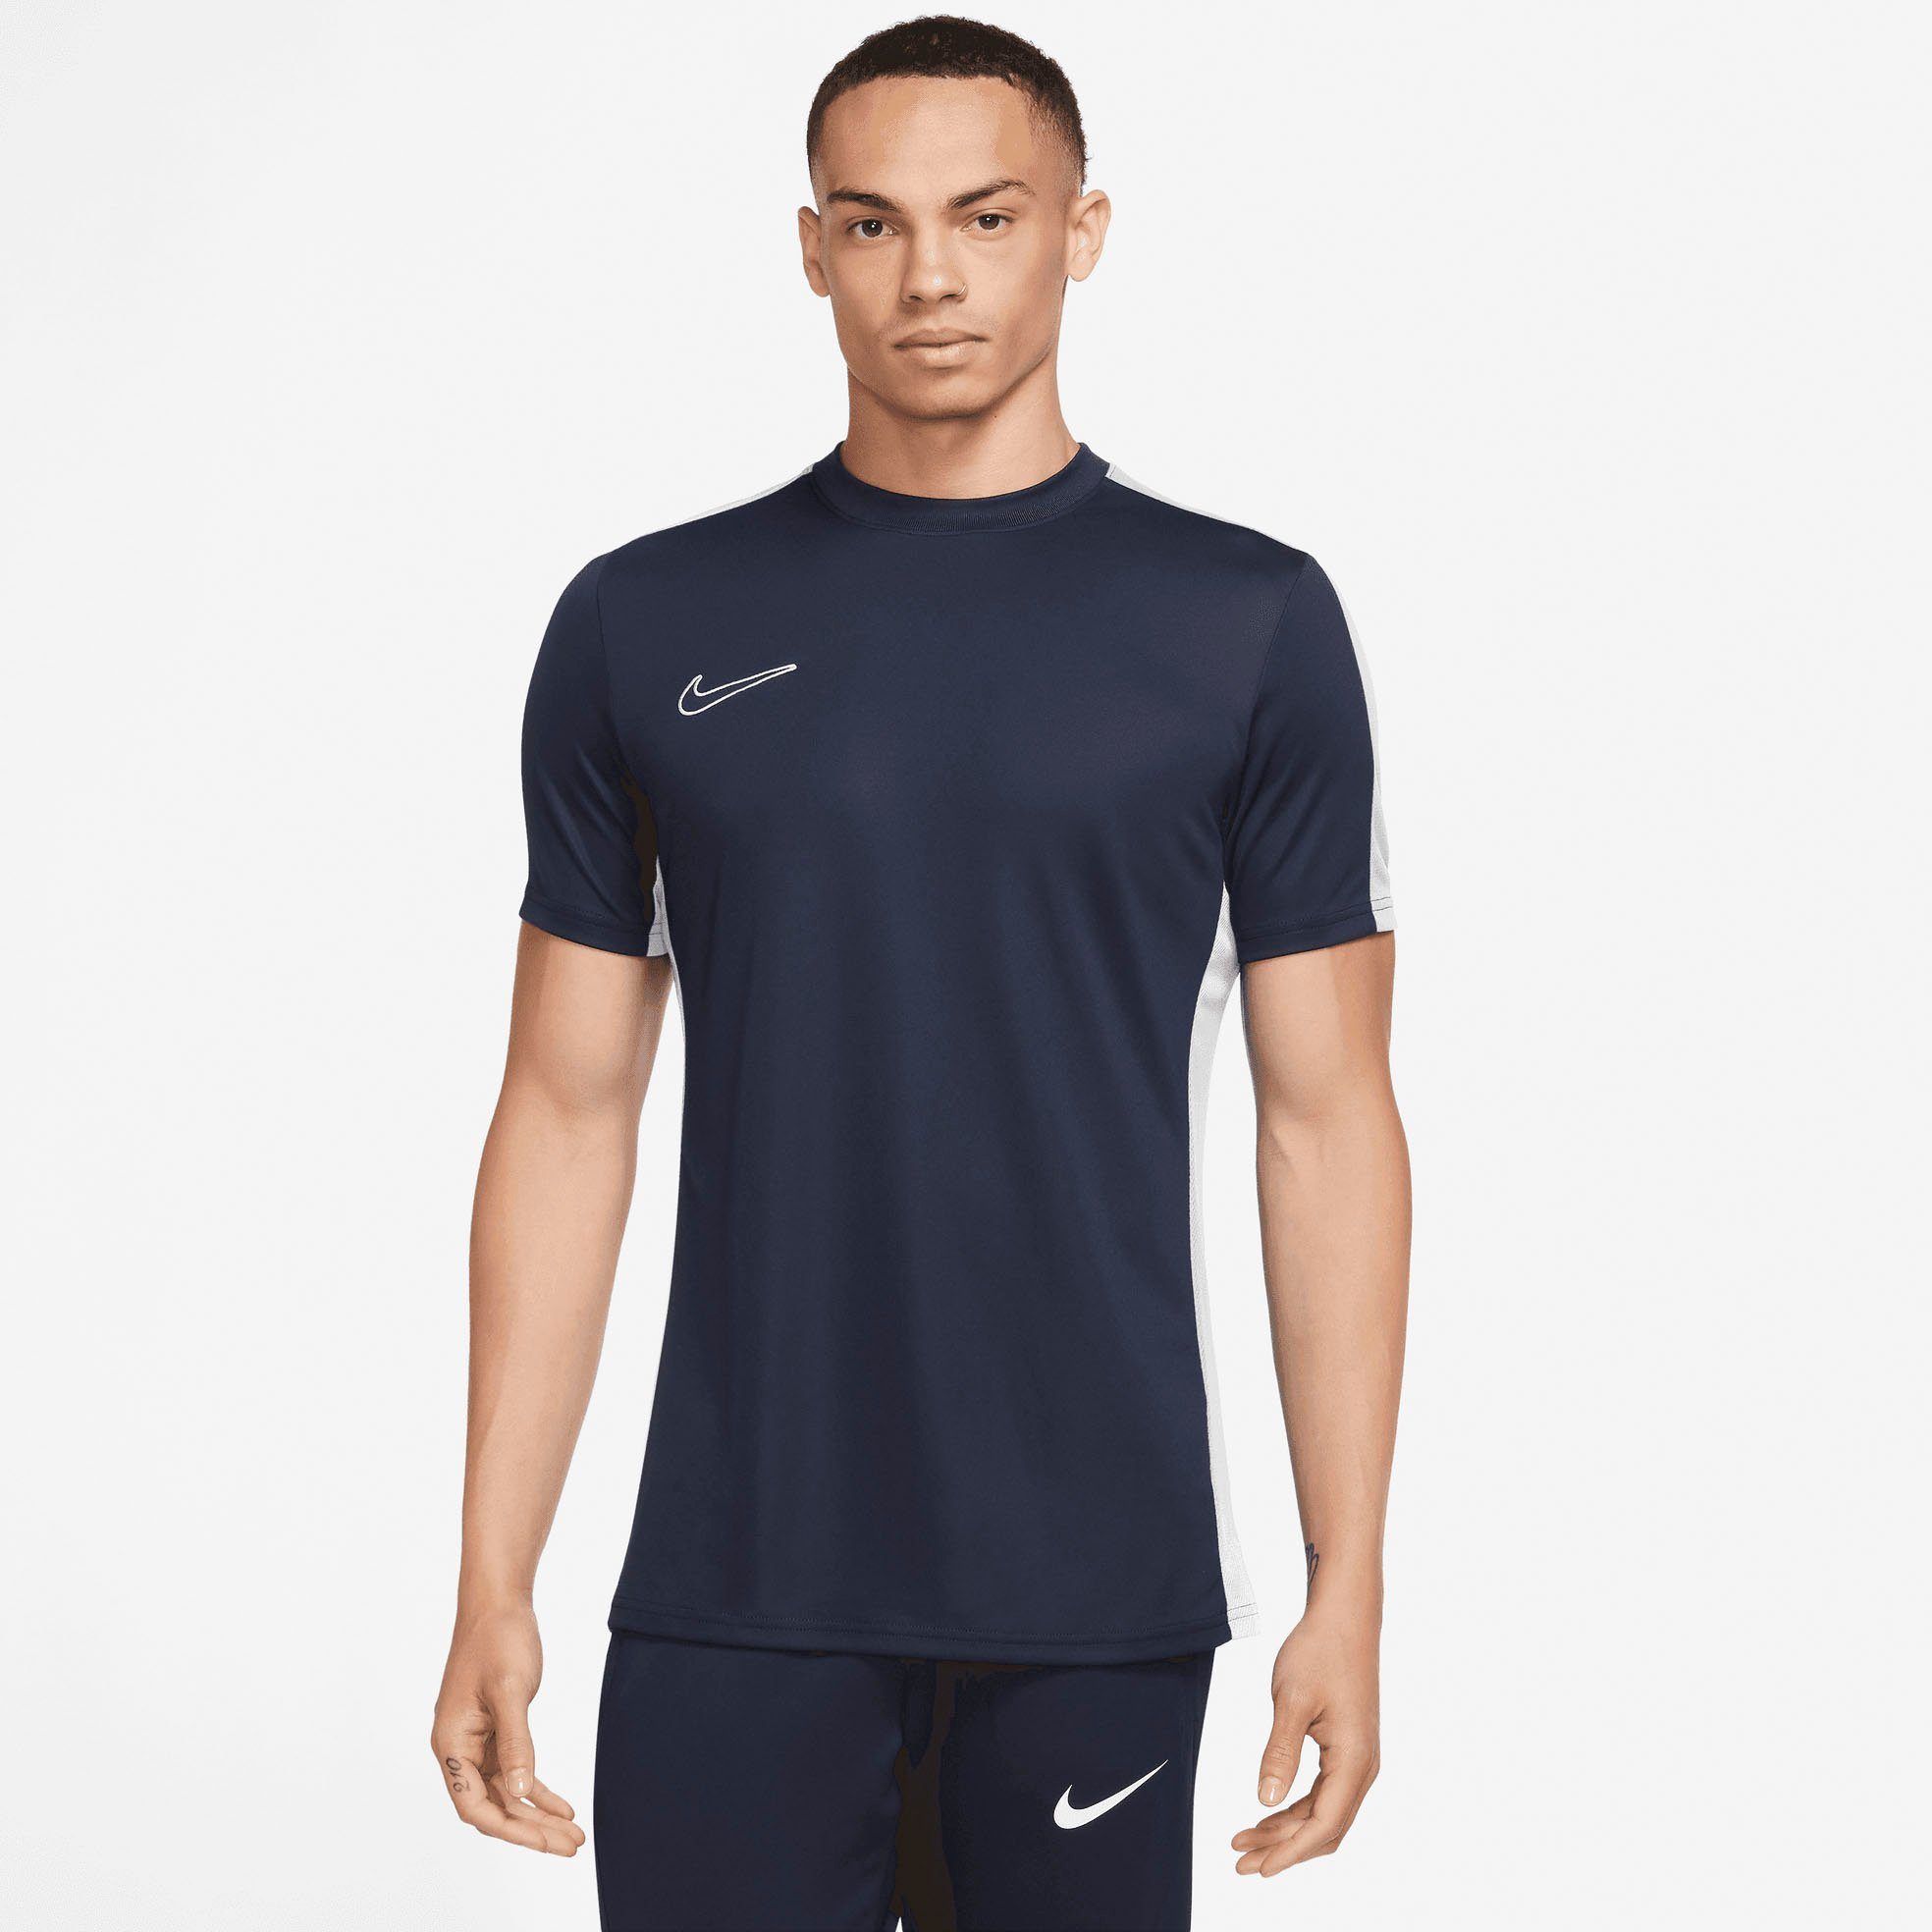 Academy Nike Dri-FIT Top Men's OBSIDIAN/WHITE/WHITE Soccer Funktionsshirt Short-Sleeve